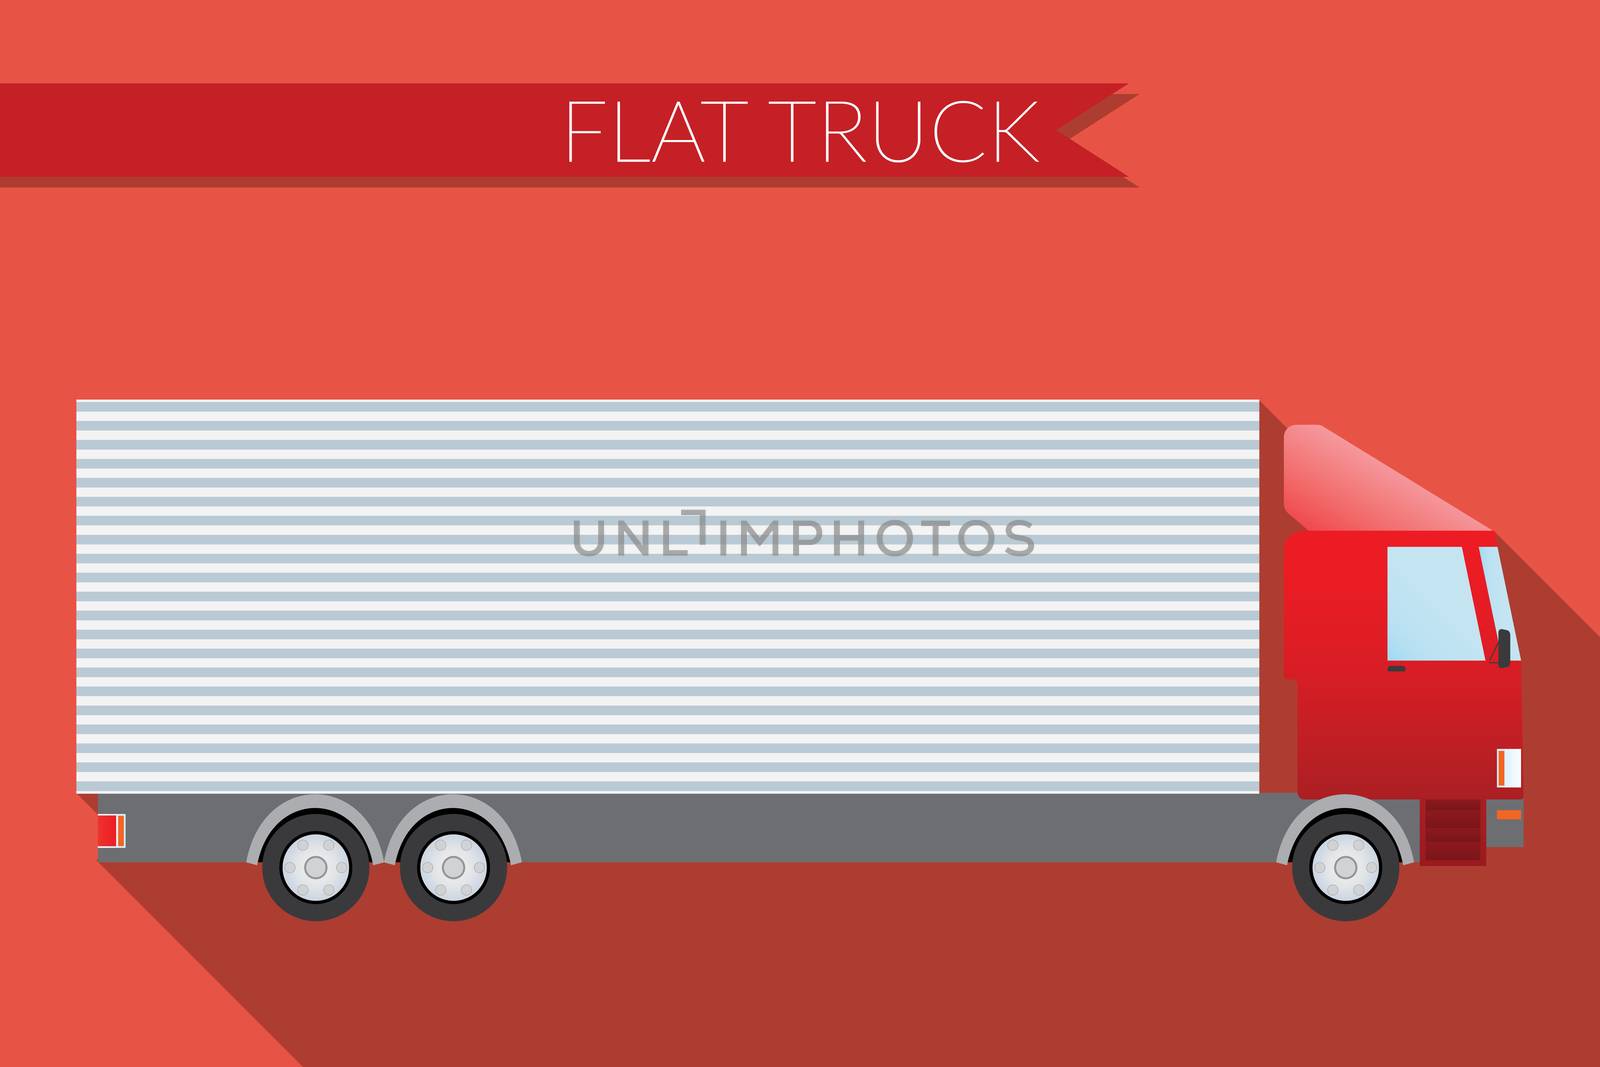 Flat design vector illustration city Transportation, truck for transportation cargo, side view 